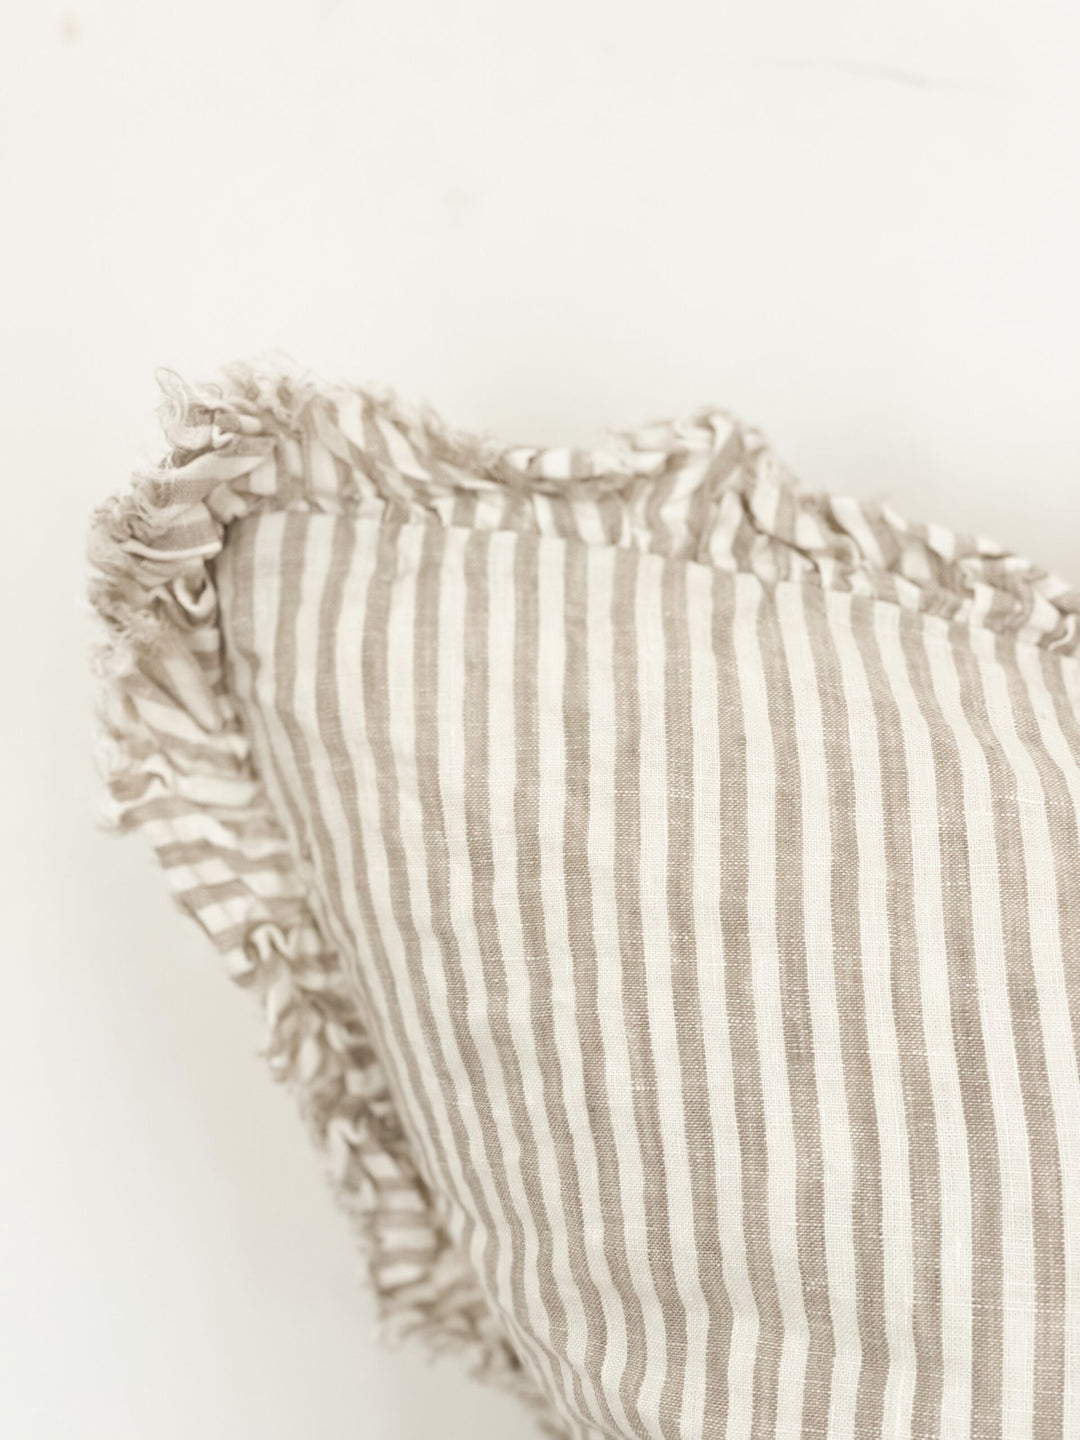 Ruffled Linen Cushion Cover 55cm×55cm – Beige Stripe